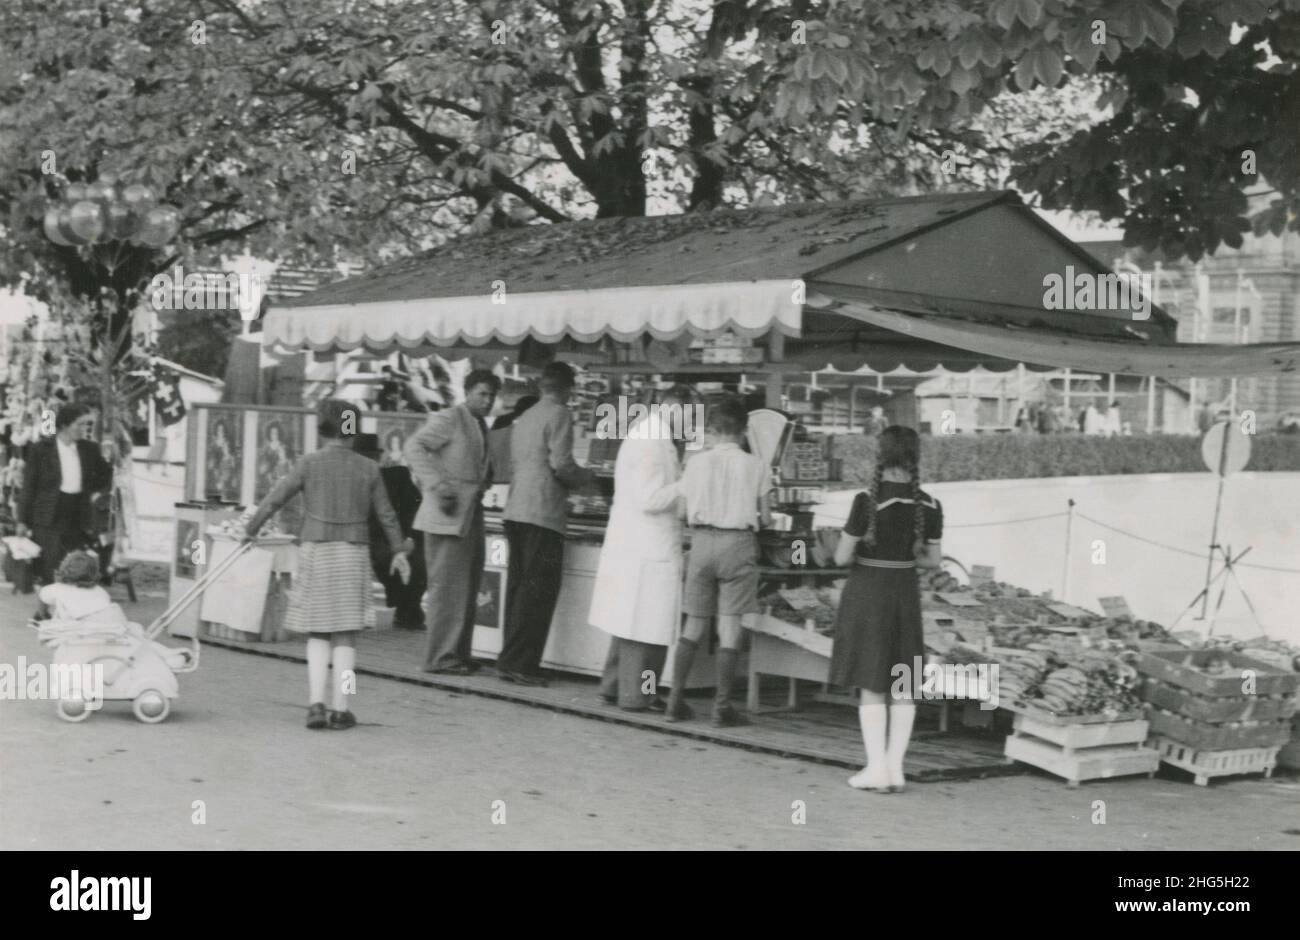 Antique circa 1950 photograph, a market stand near shore in Lucerne, Switzerland. SOURCE: ORIGINAL PHOTOGRAPH Stock Photo